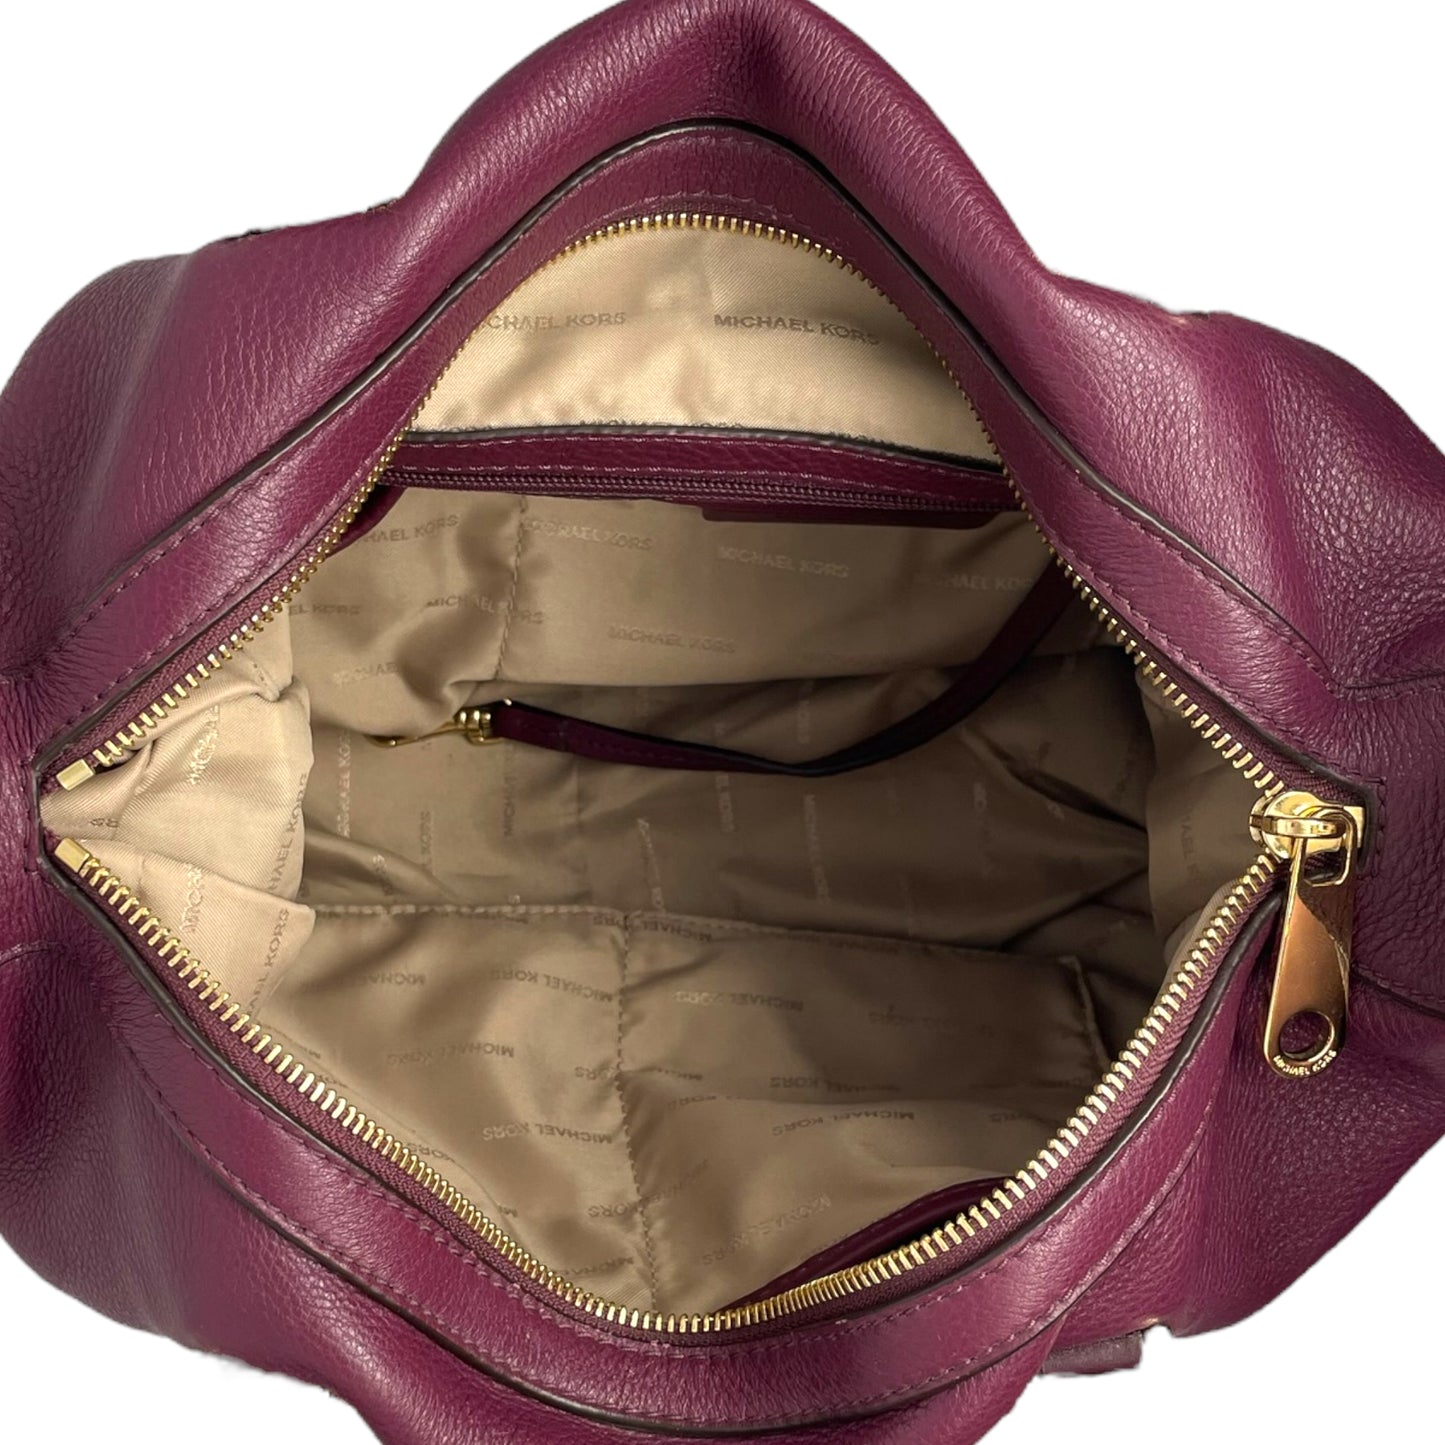 Michael Kors Raven Brick Large Leather Satchel Handbag